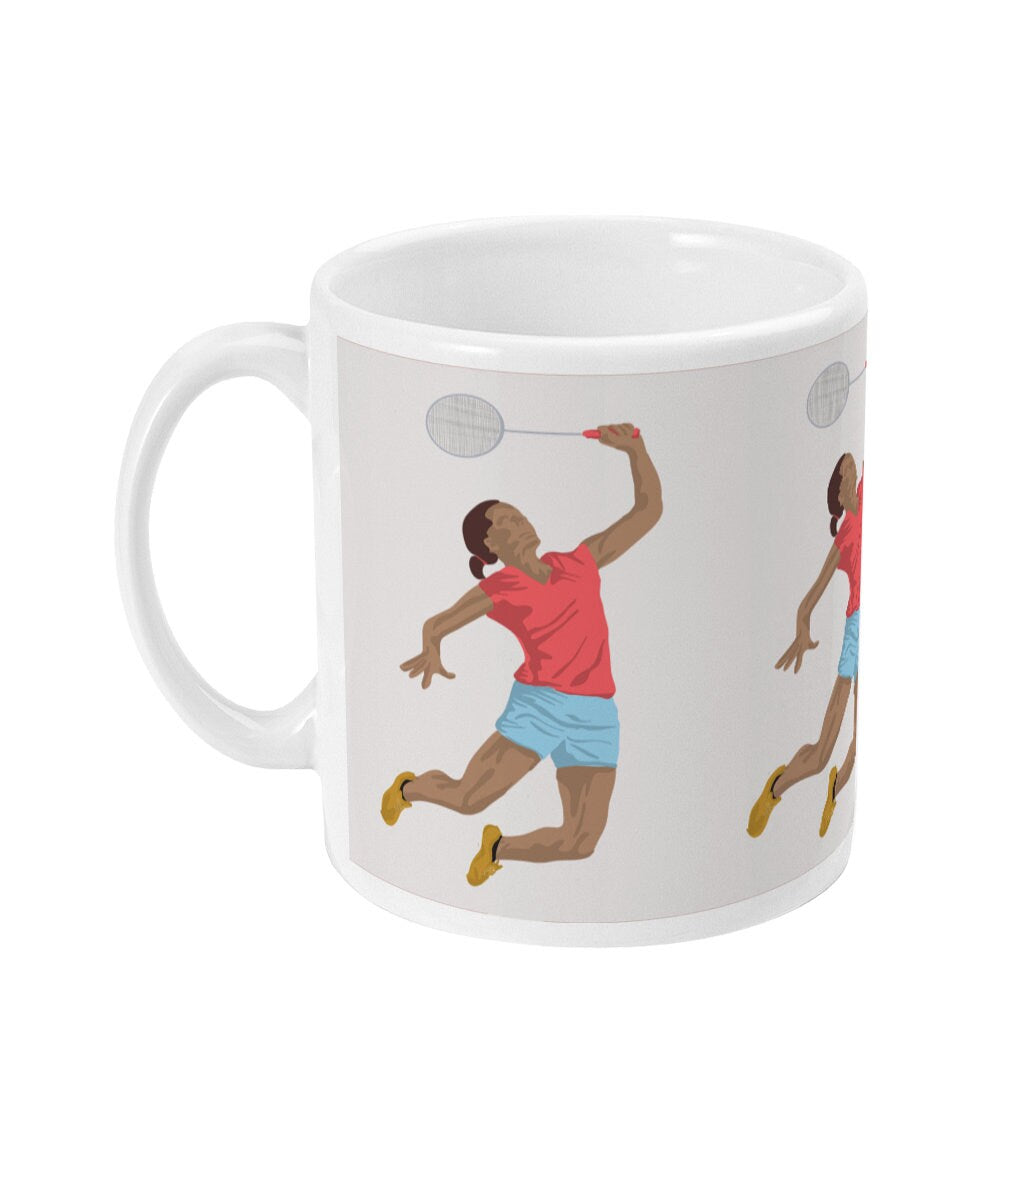 Cup or mug "Badminton player" - customizable